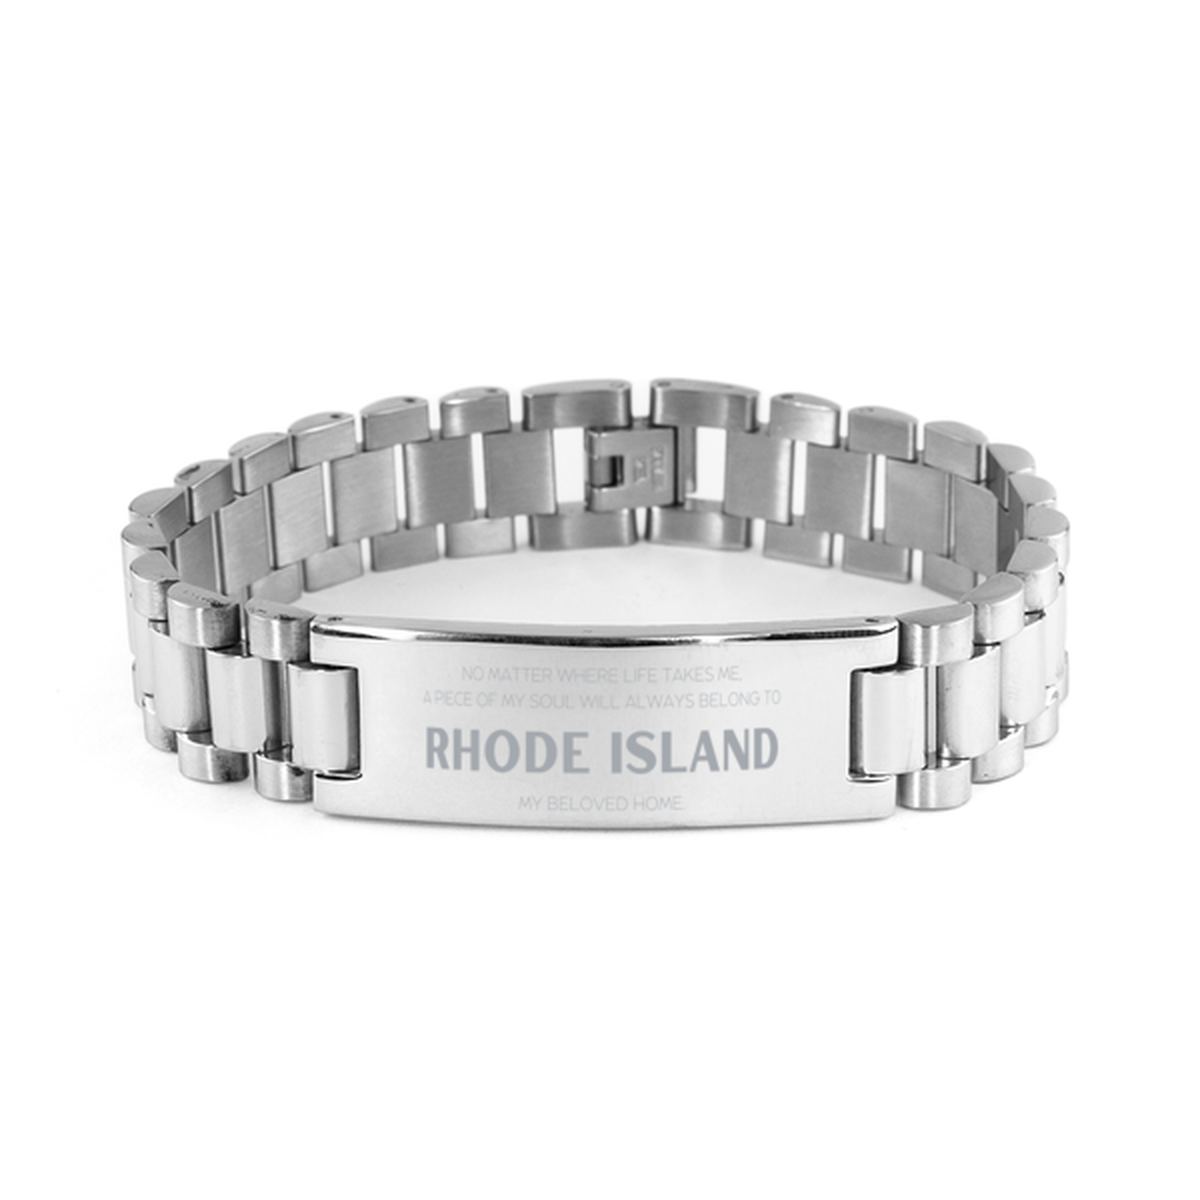 Love Rhode Island State Gifts, My soul will always belong to Rhode Island, Proud Ladder Stainless Steel Bracelet, Birthday Unique Gifts For Rhode Island Men, Women, Friends